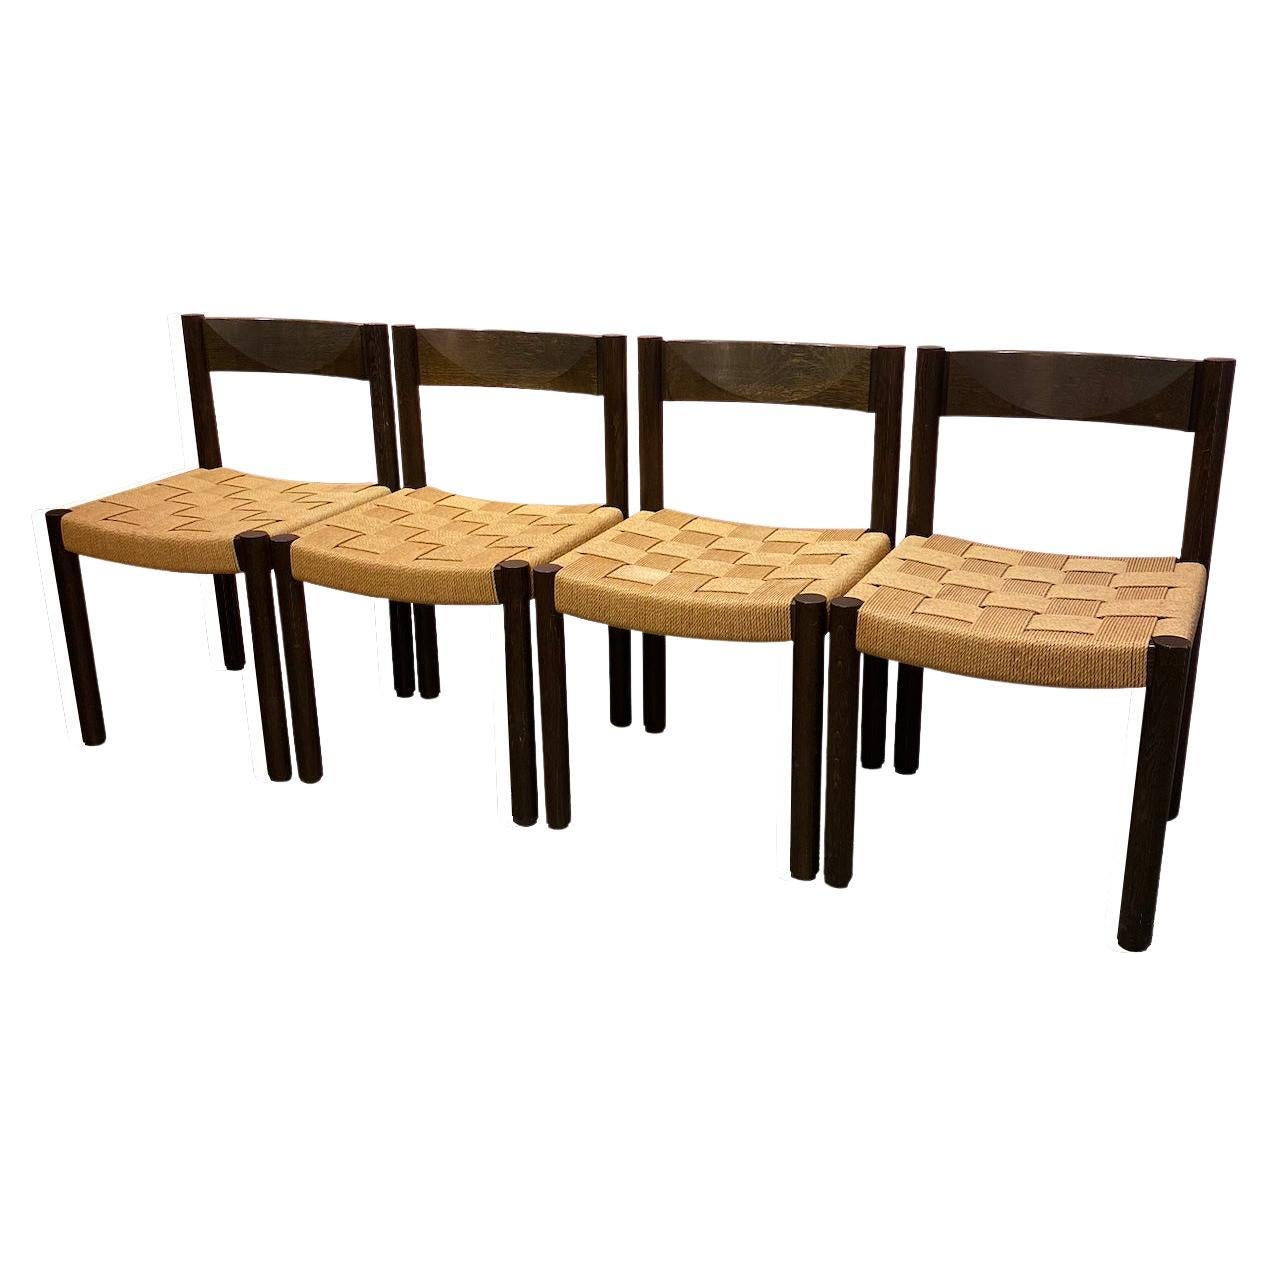 Set of 4 dining chairs by Robert Haussmann for Dietiker, Circa 1960.